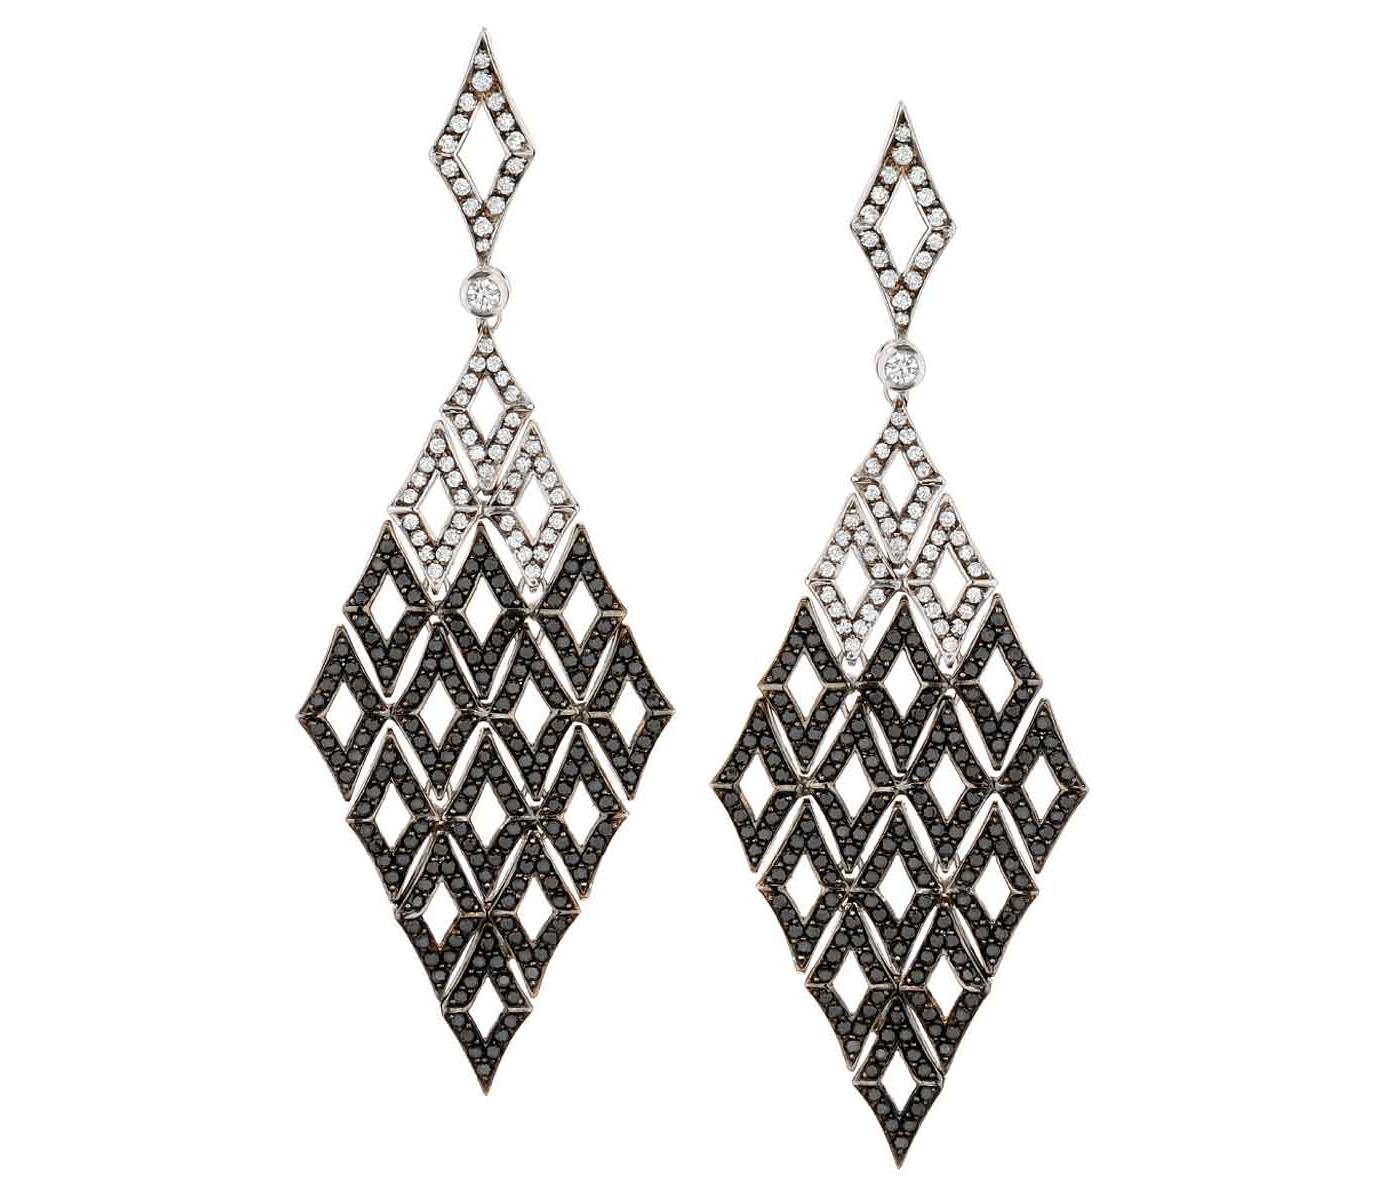 Earrings by Art ‘Orafo for Swarovski Gems